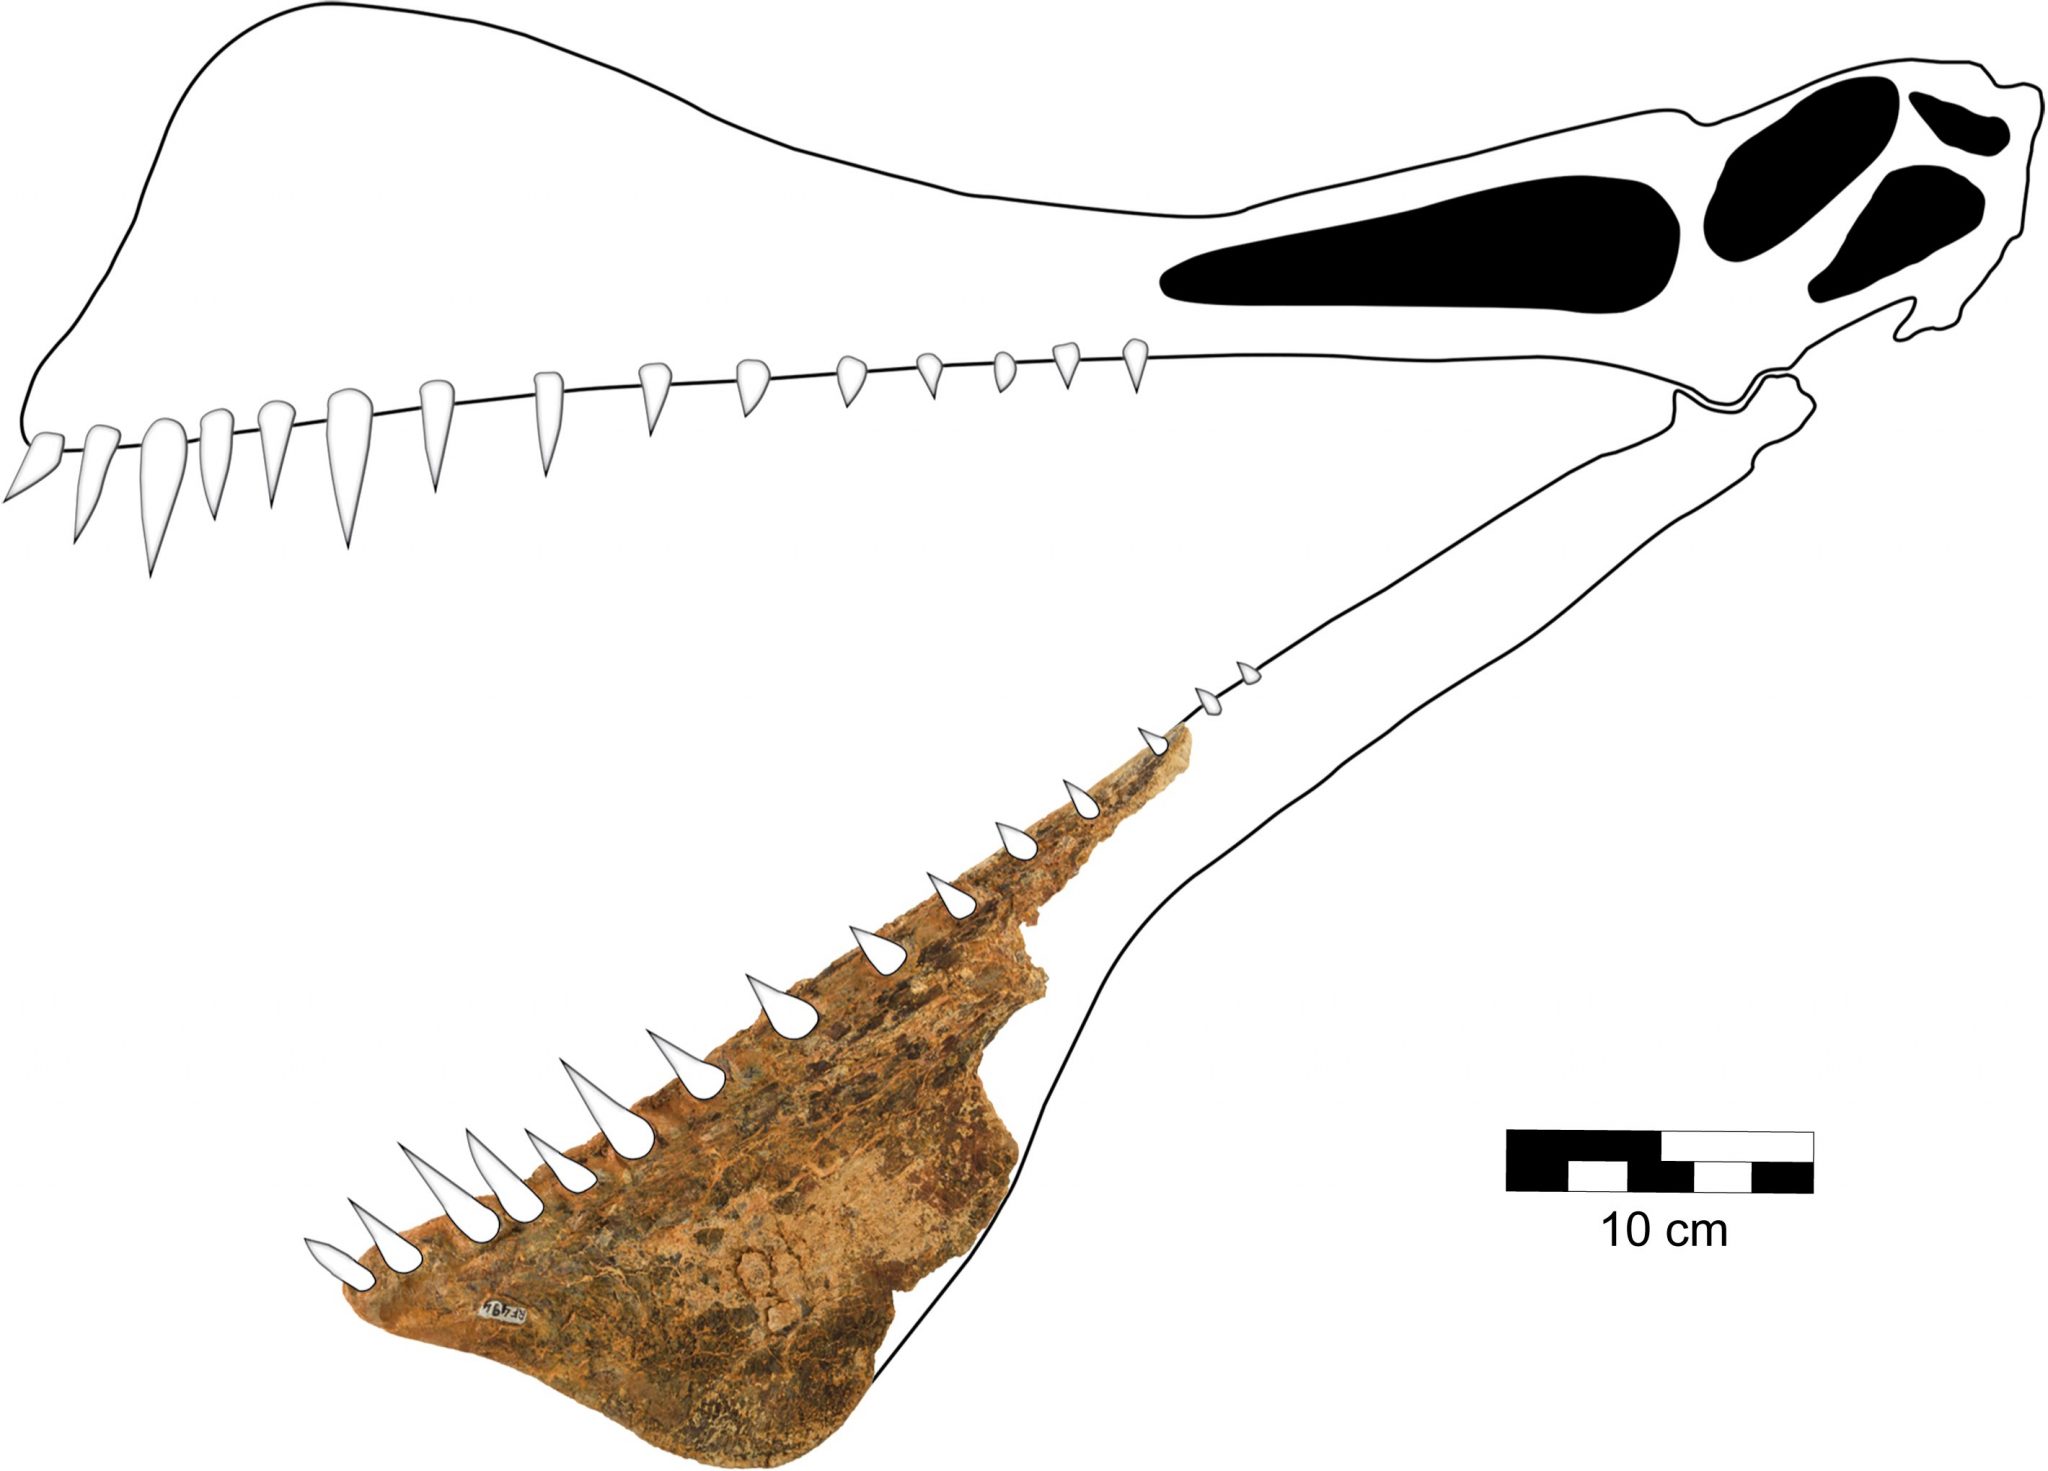 澳大利亚发现一种翼展有7米的新翼龙化石Thapunngaka shawi